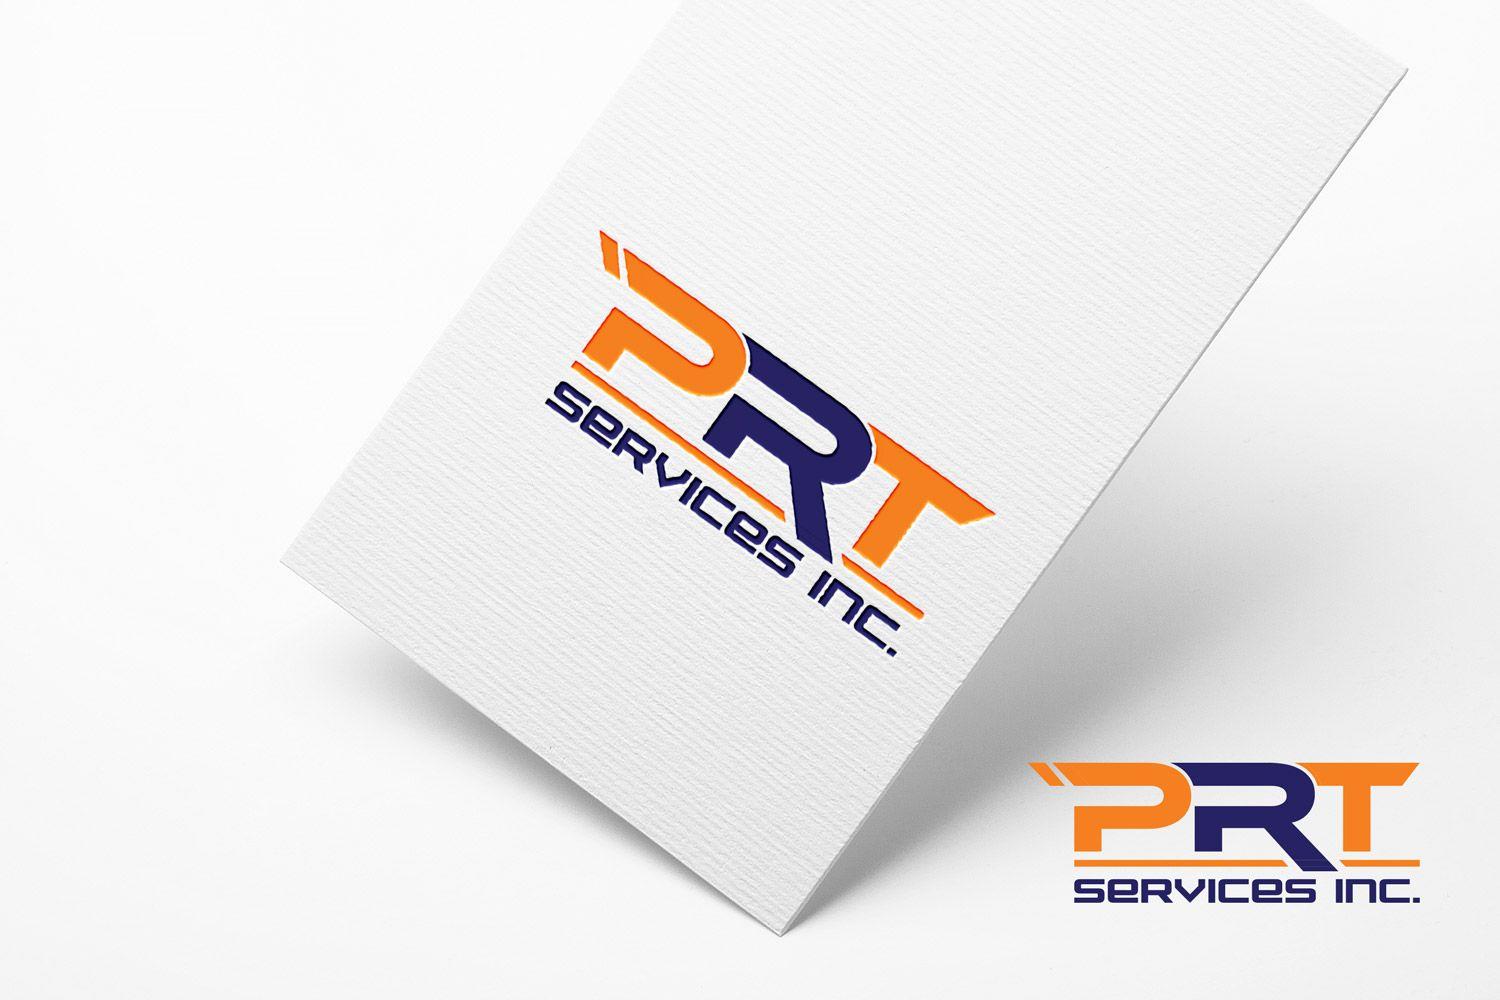 PRT Logo - Bold, Modern, Industrial Logo Design for PRT Services Inc.